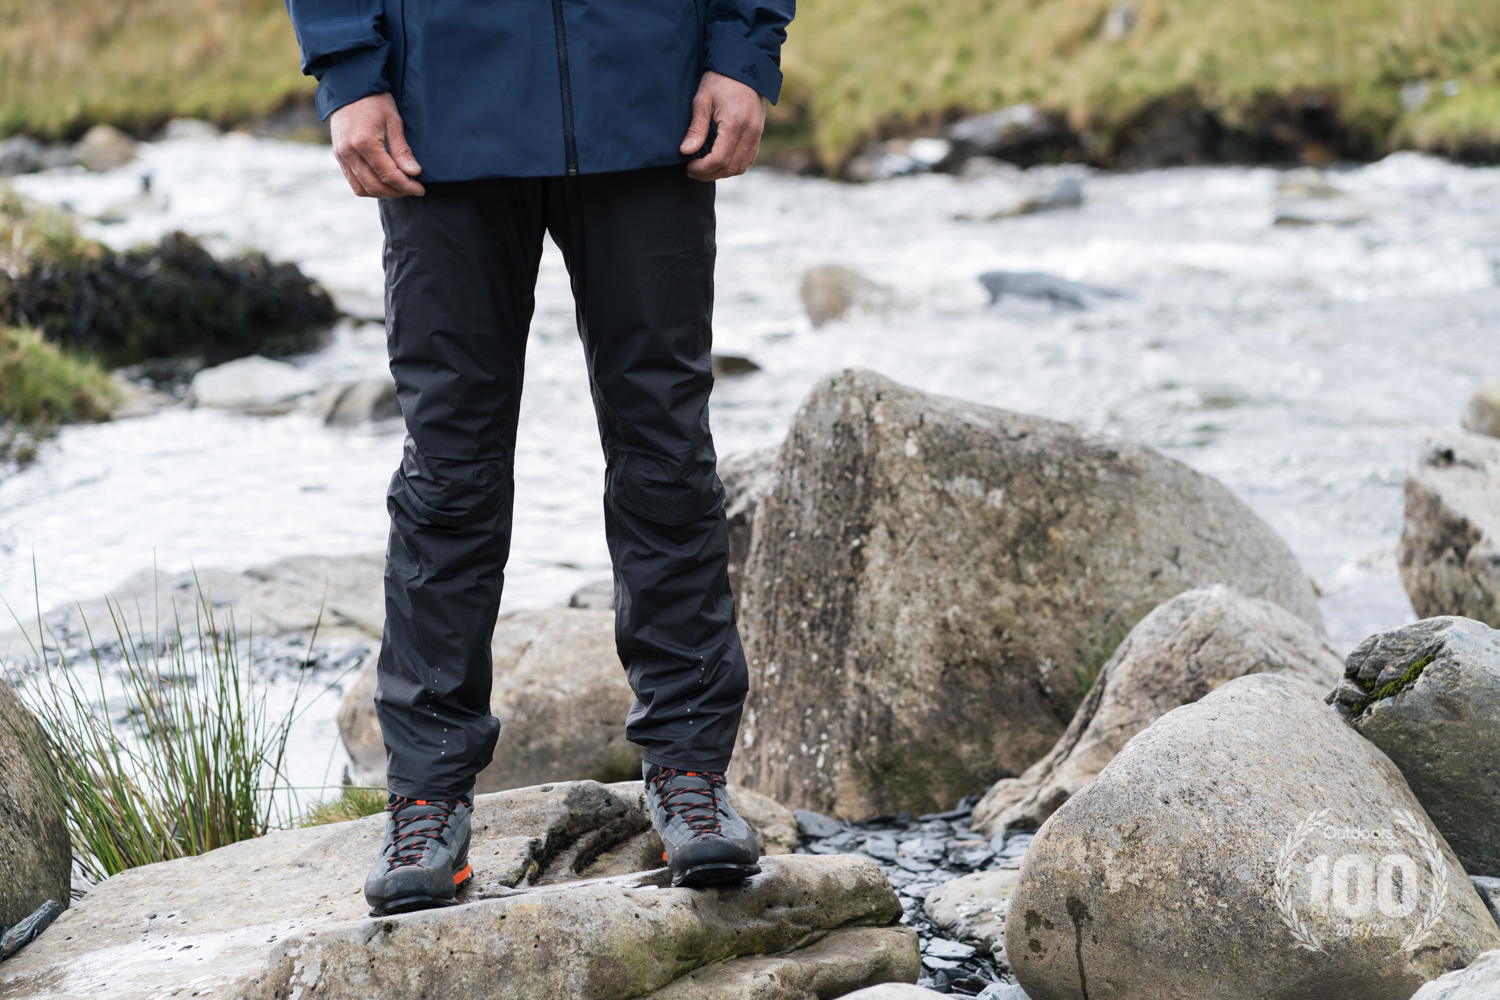 CimAlp Storm Pro Pant 2H Waterproof Trousers Review